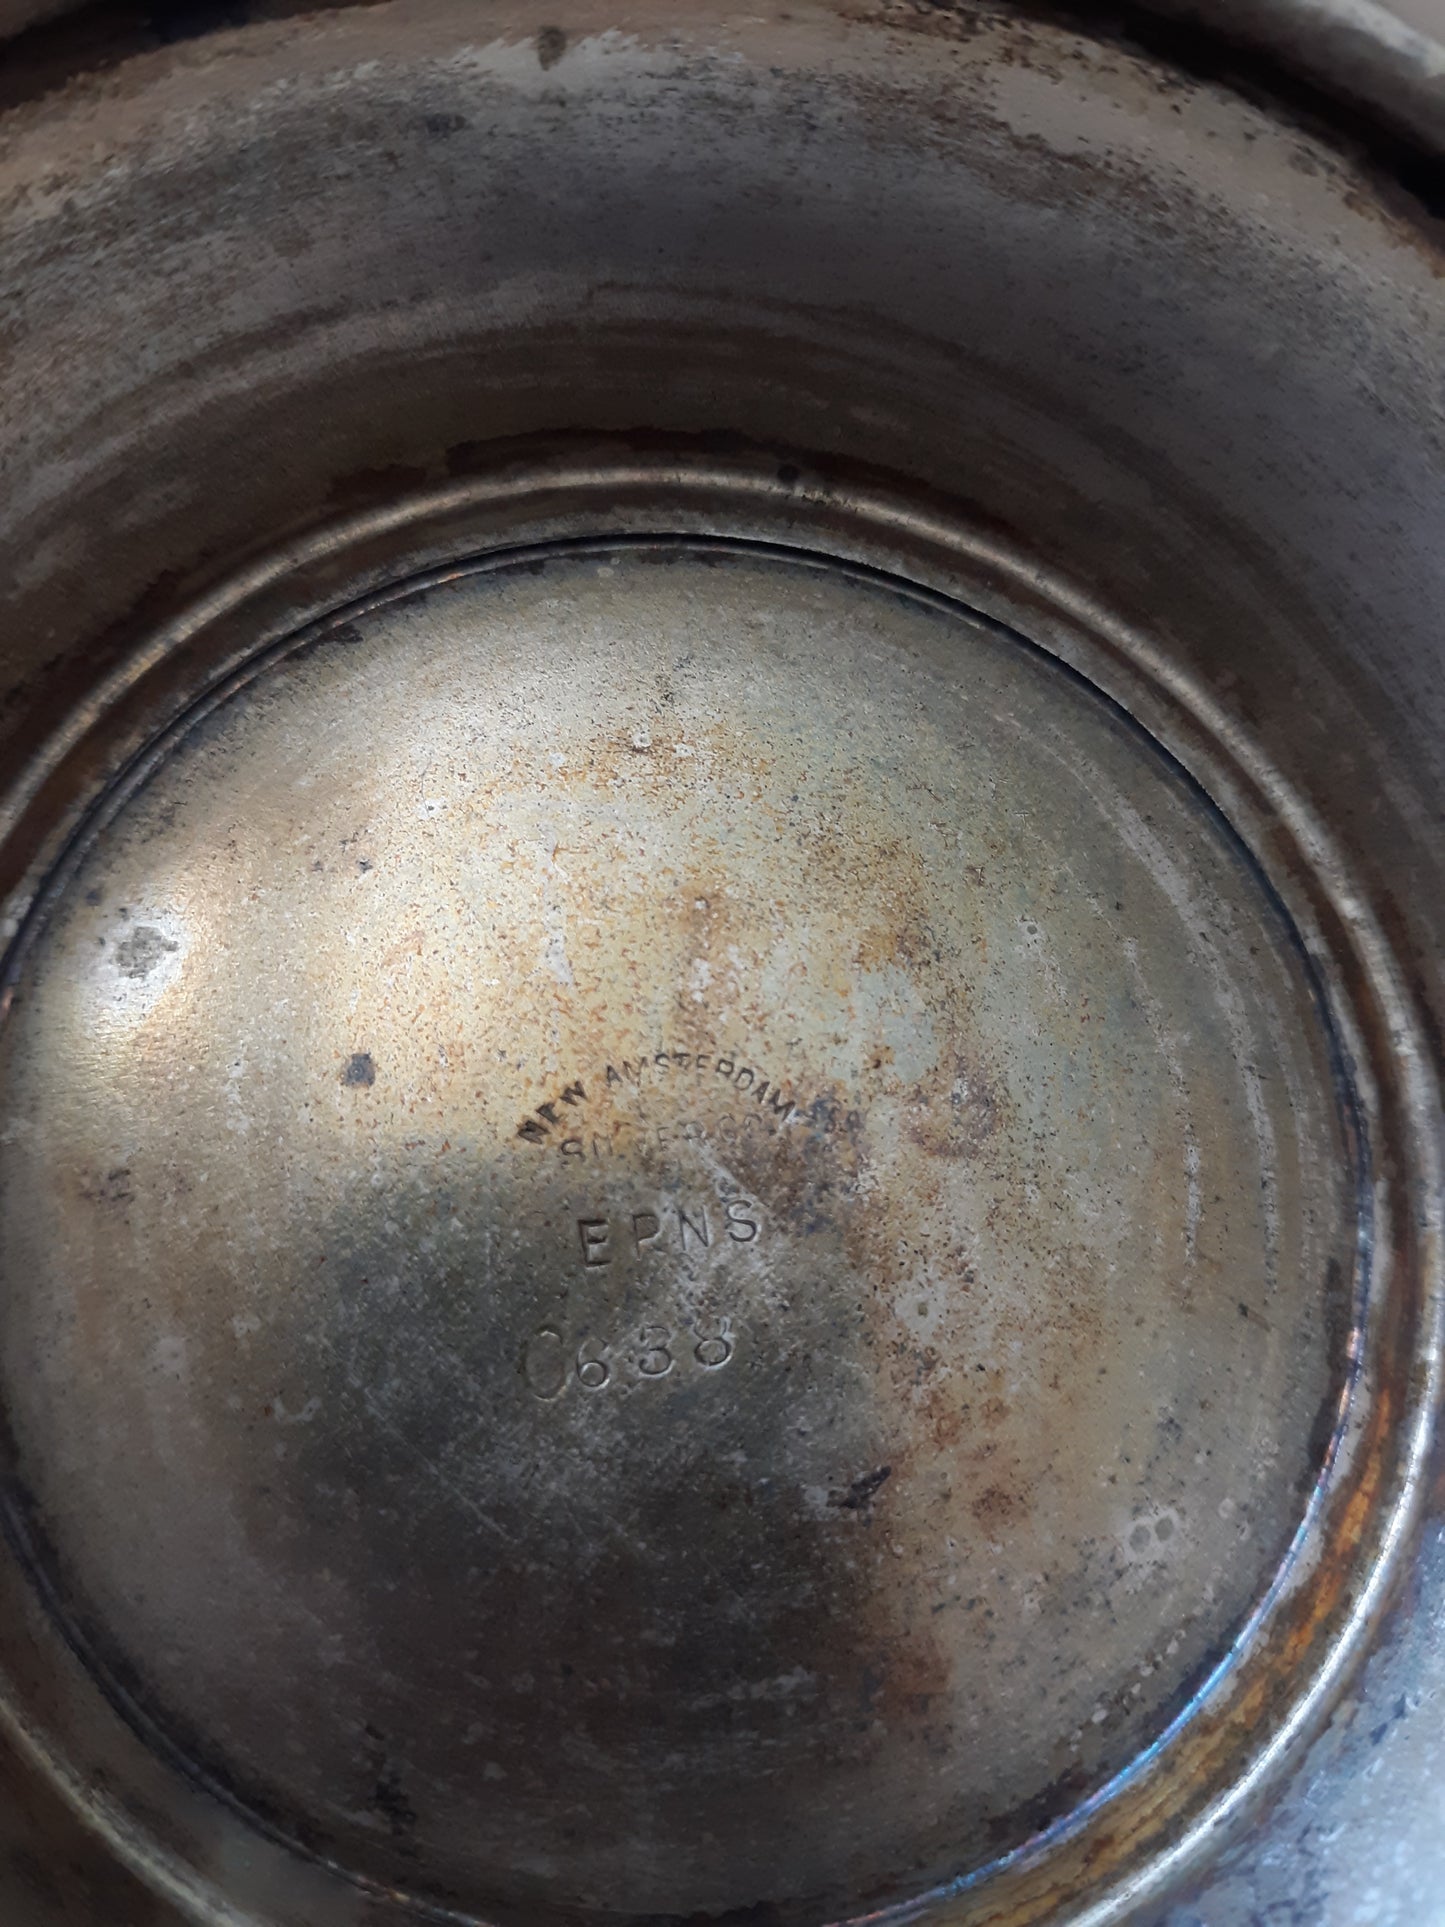 Vintage Silver Plated New Amsterdam Pedestal Bowl